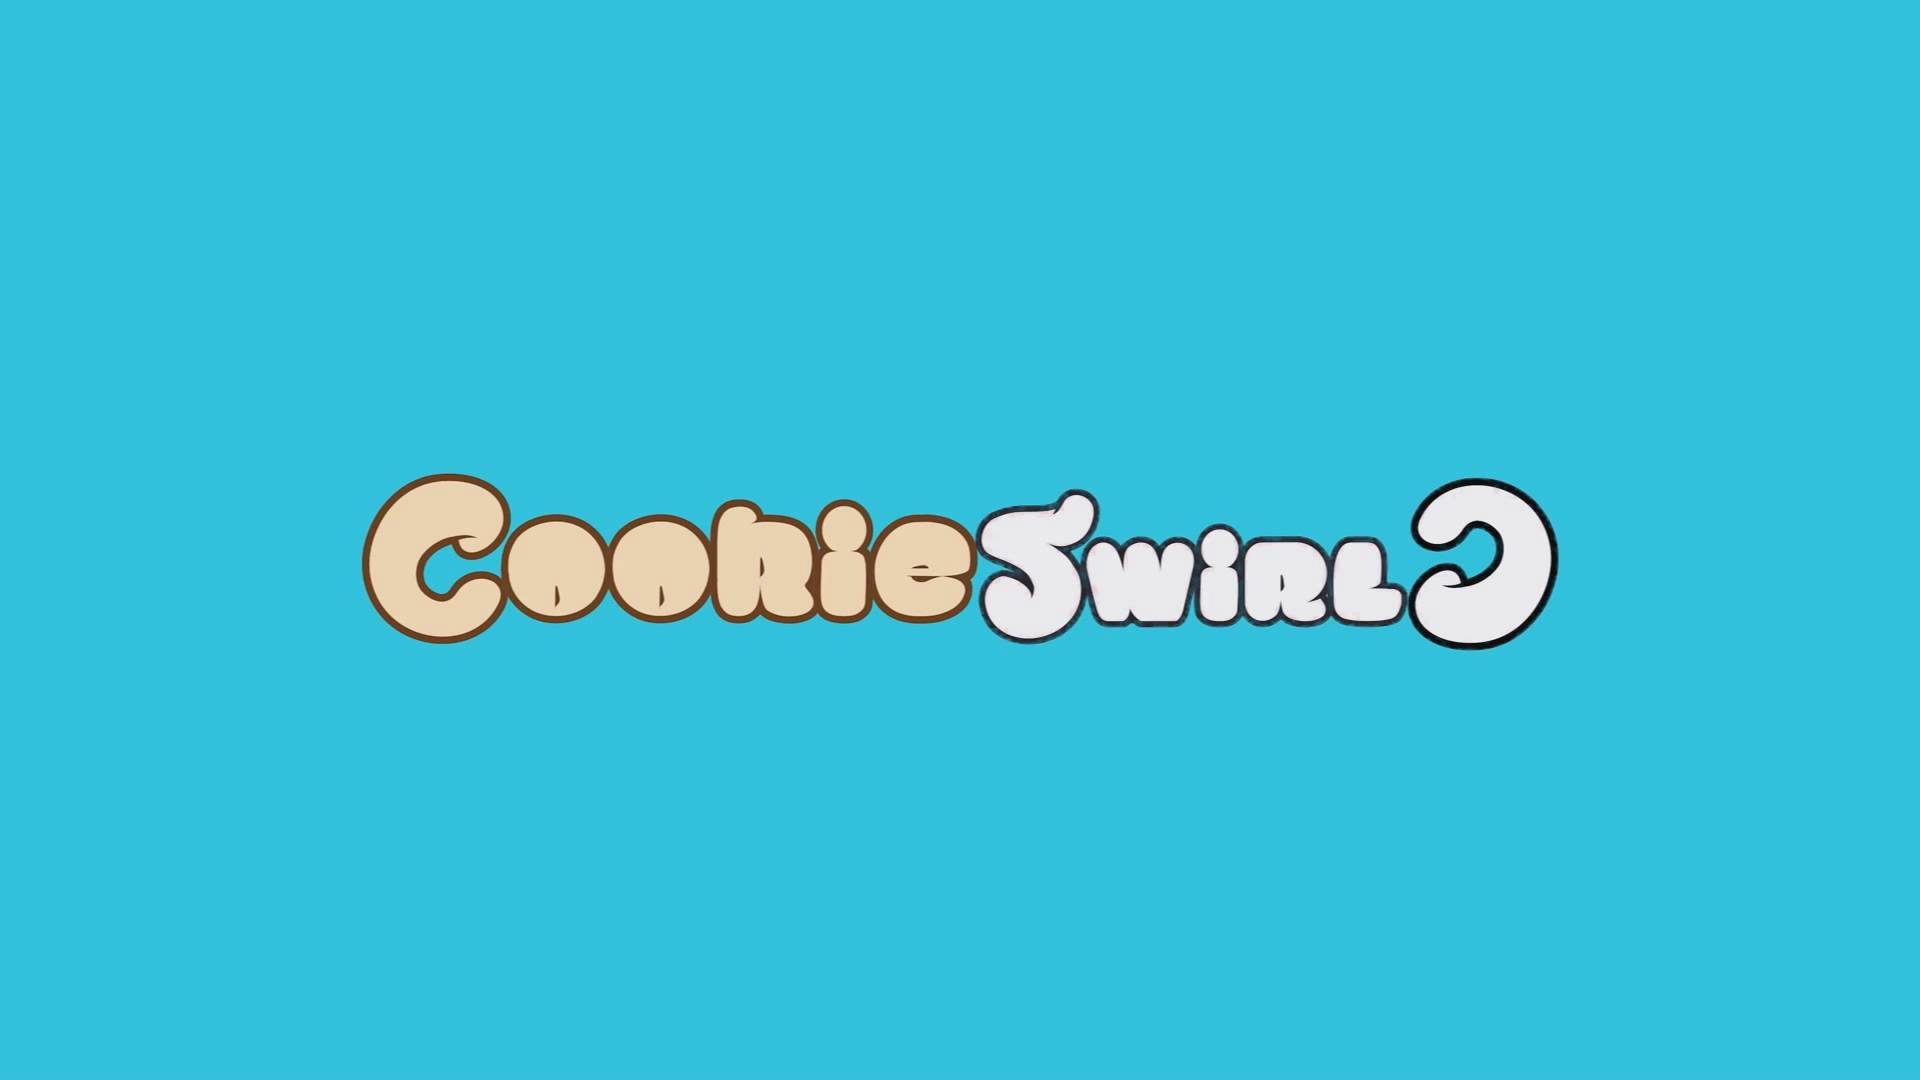 Cookie Swirl Logo - Cookie swirl c Logos